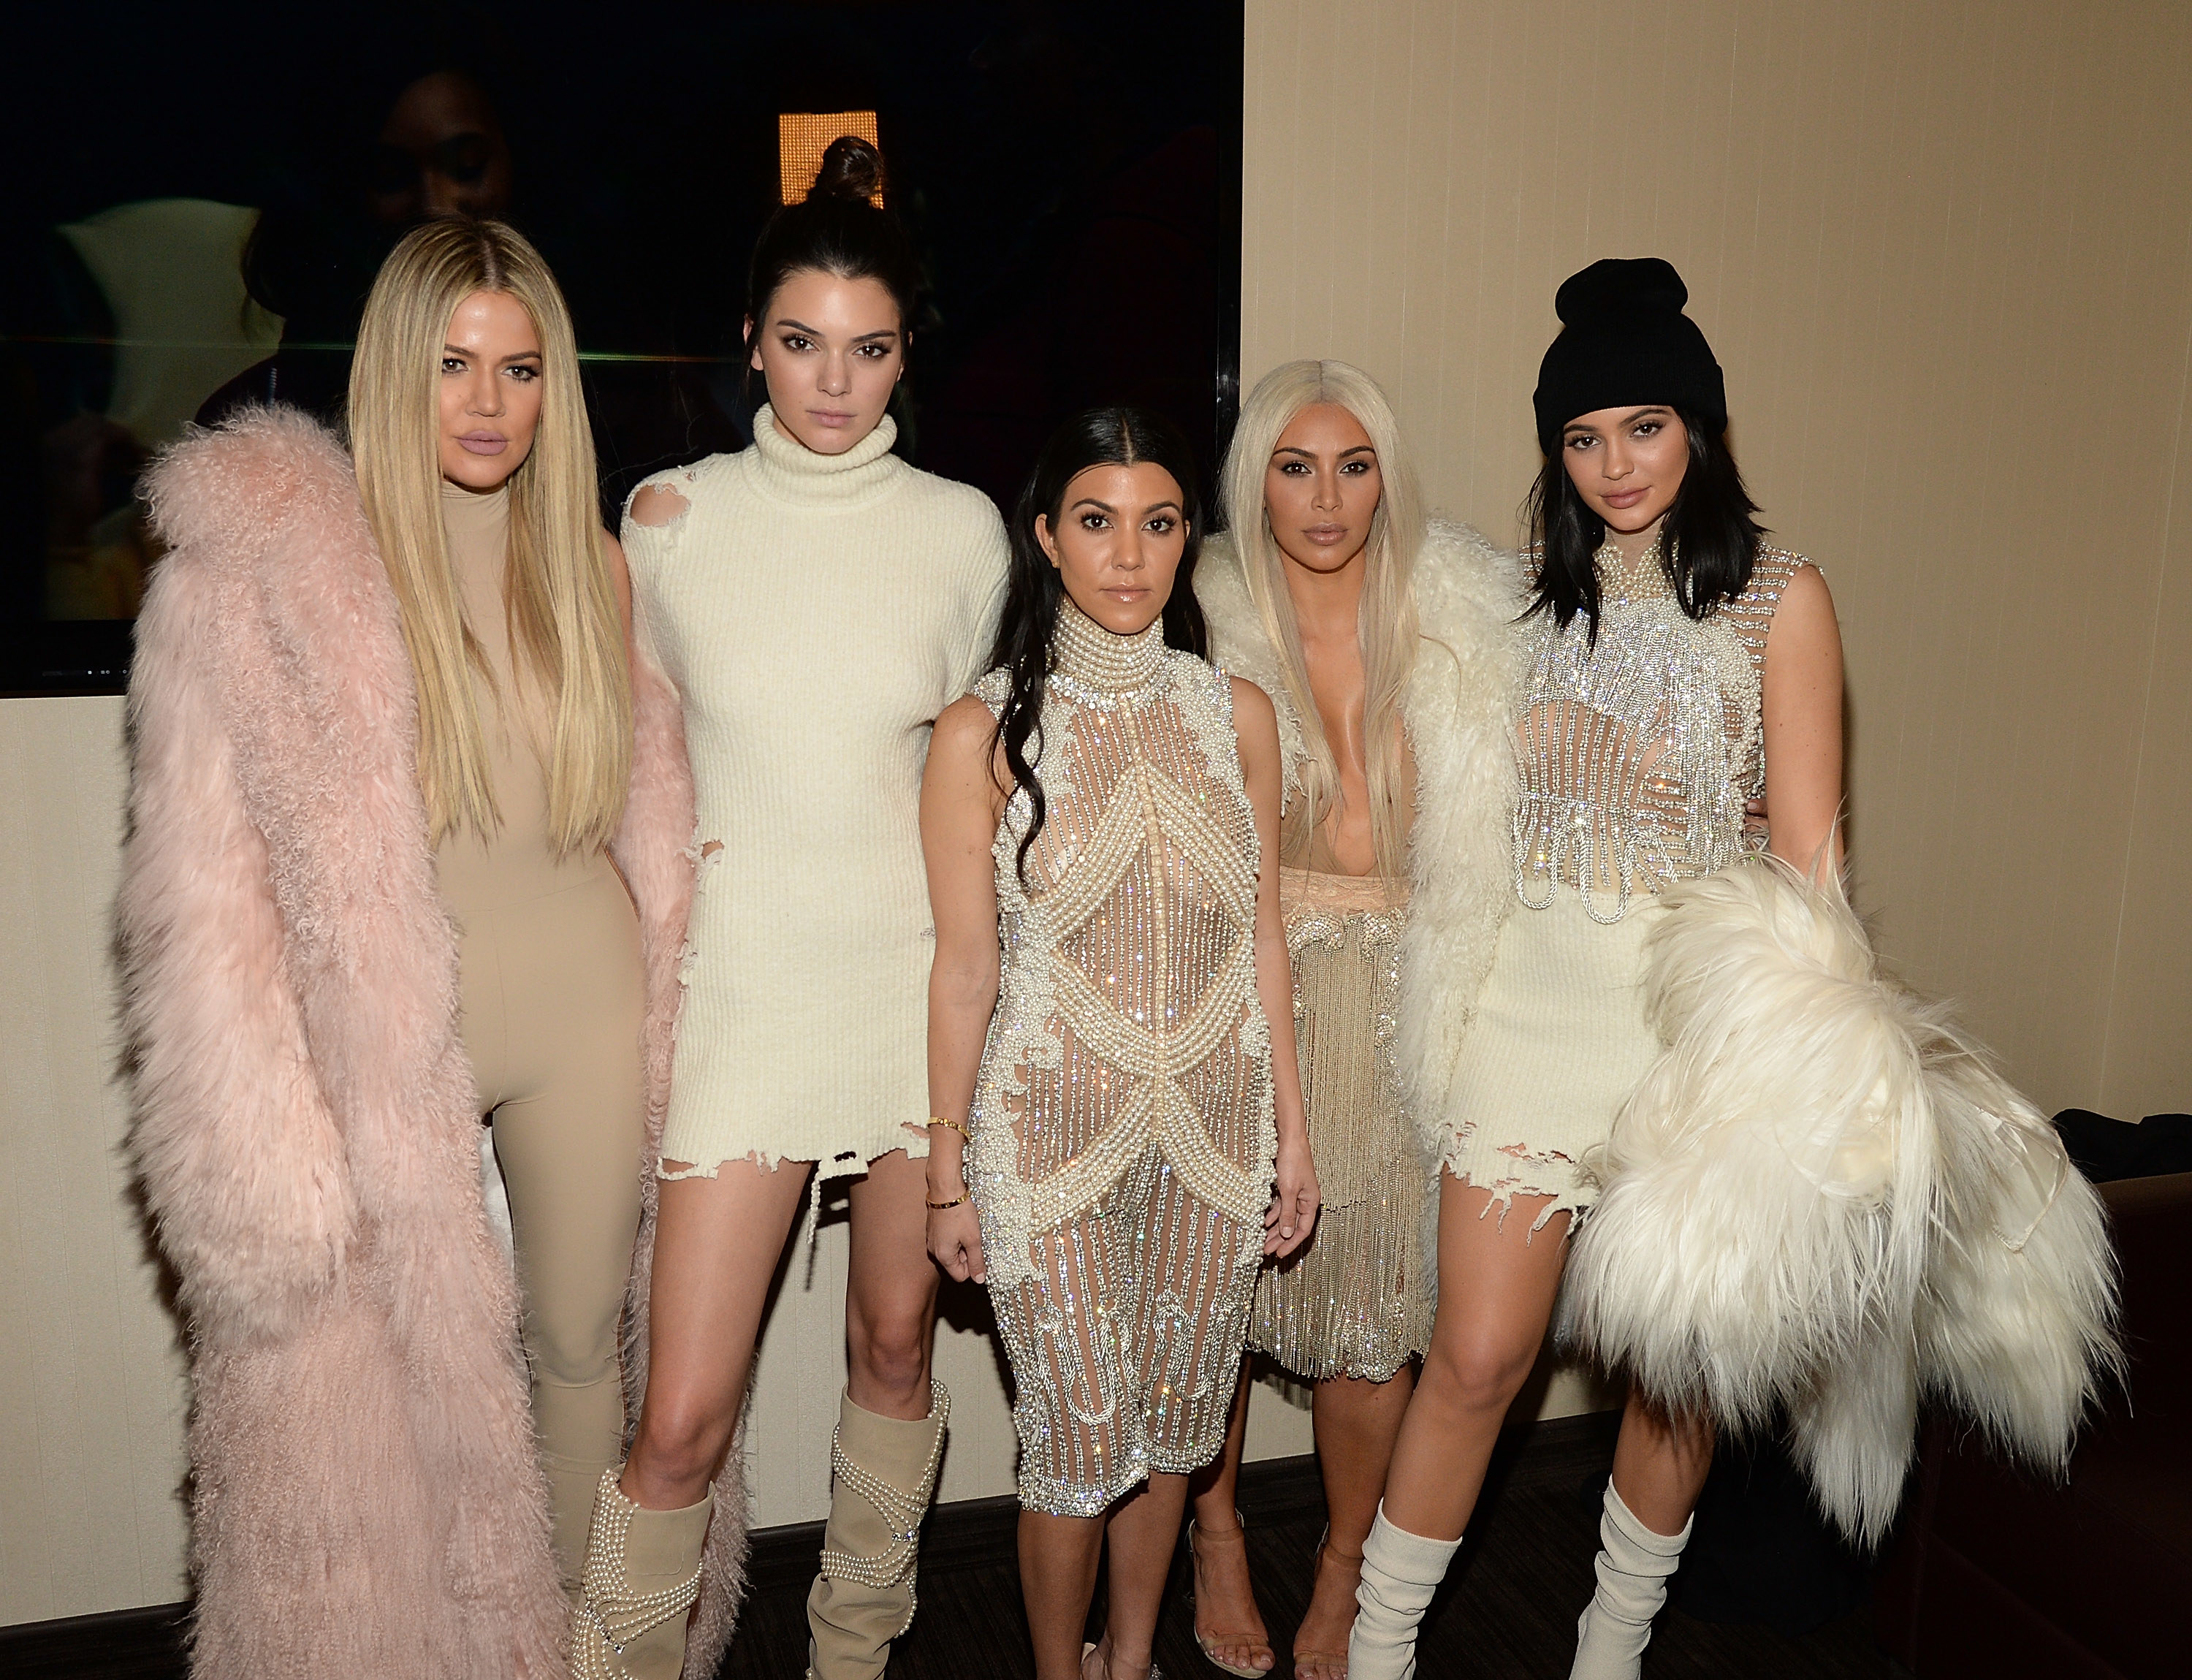 Khloé, Kendall, Kourtney, Kim, and Kylie stand together